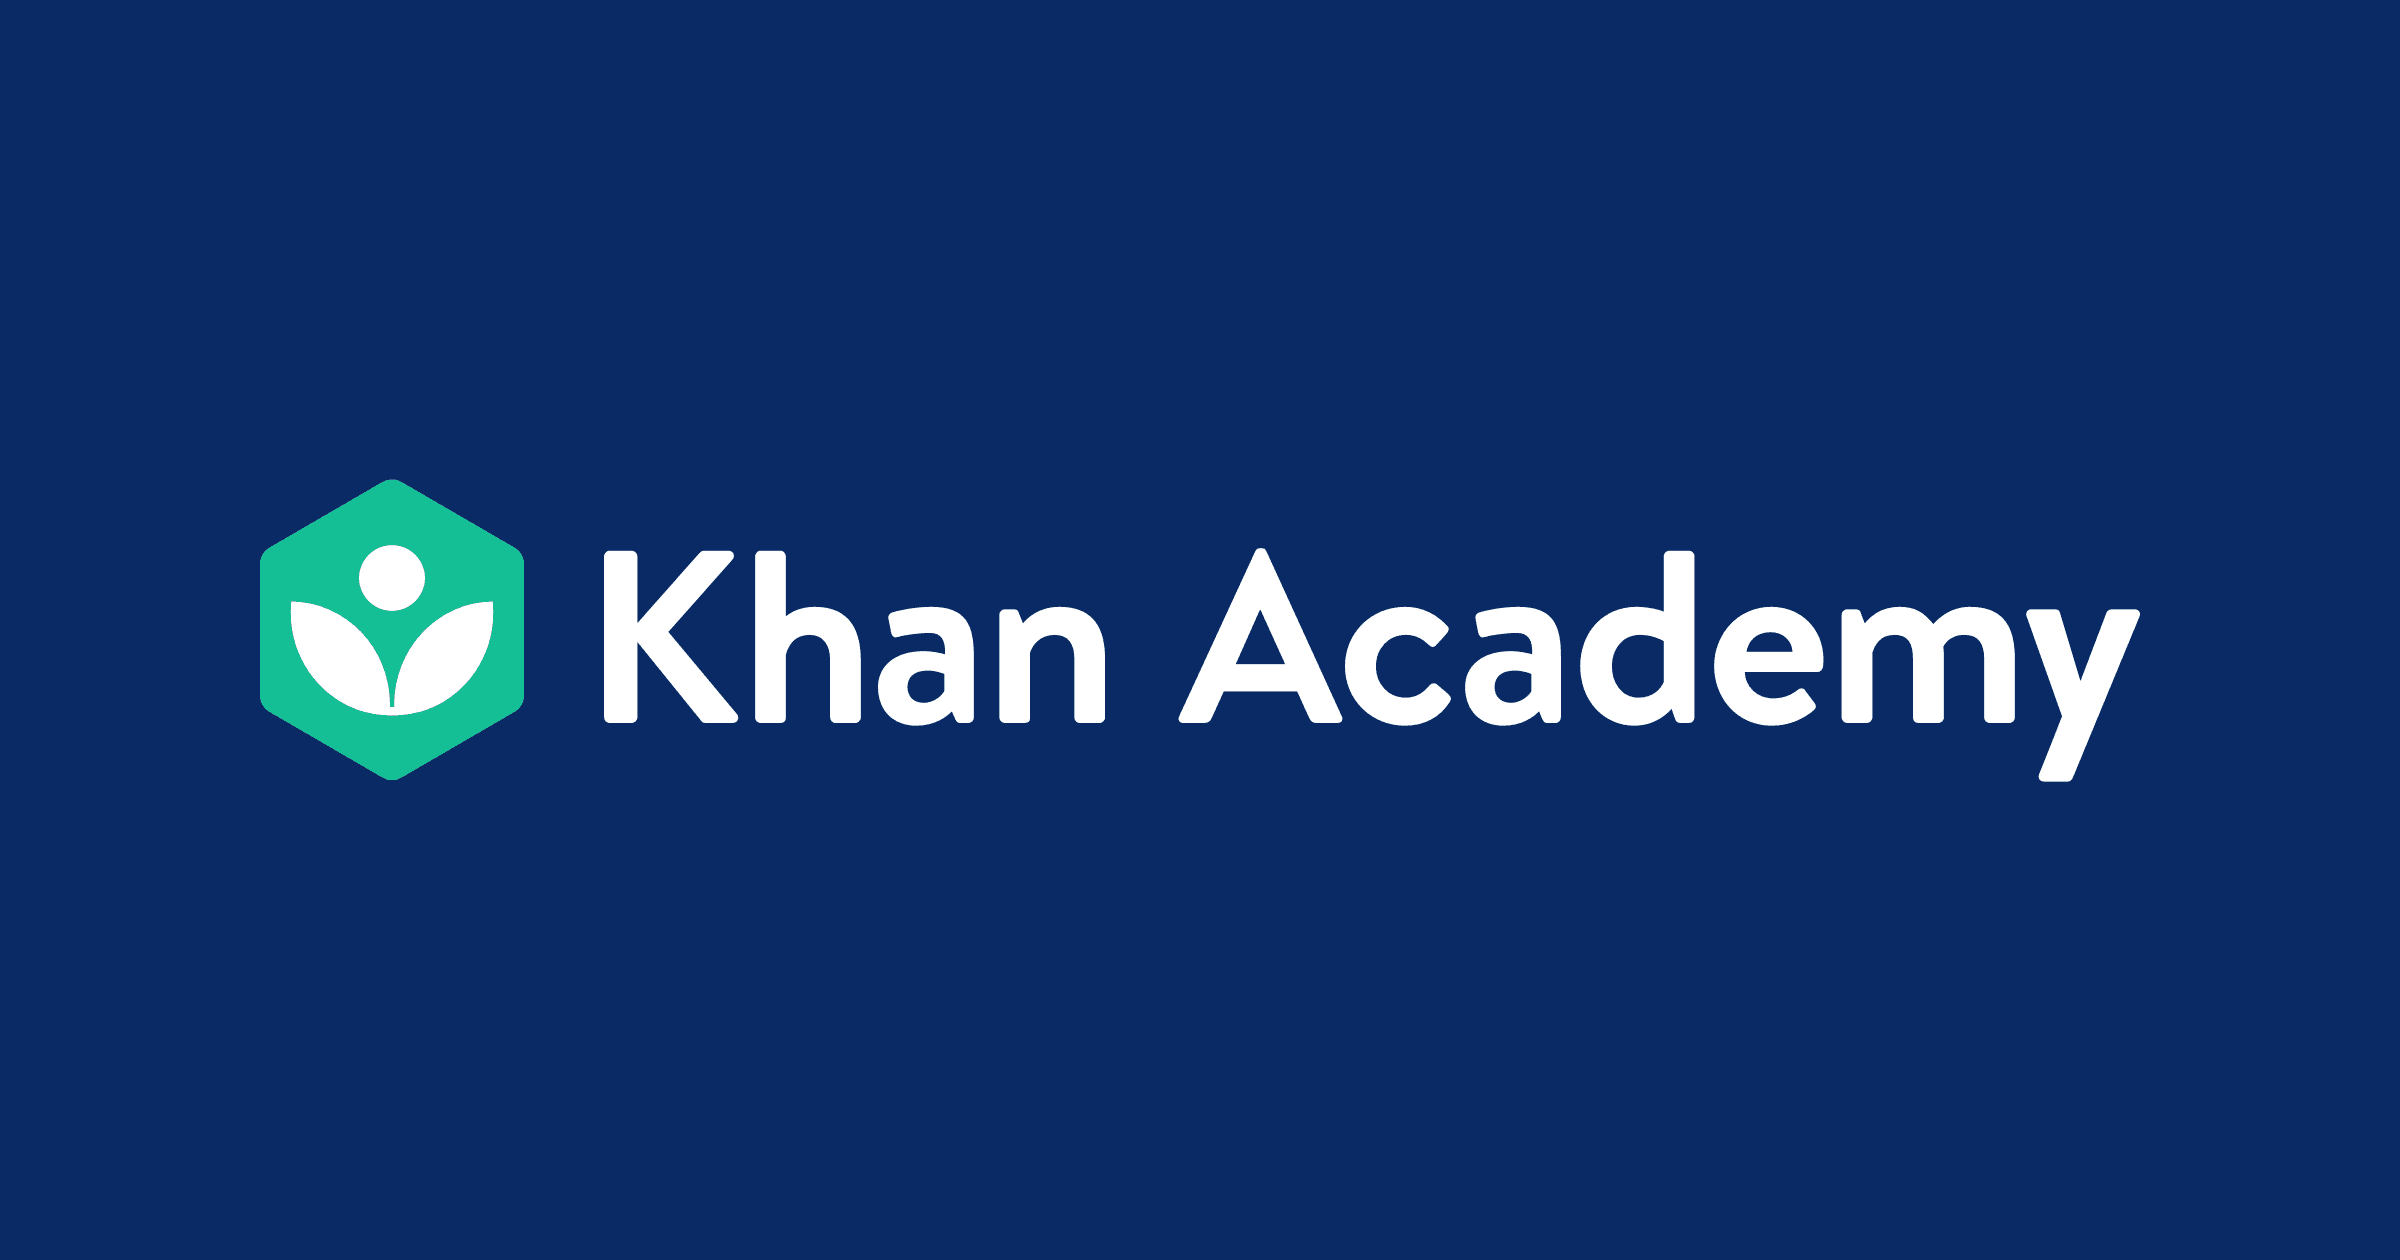 Click to open Khan Academy.